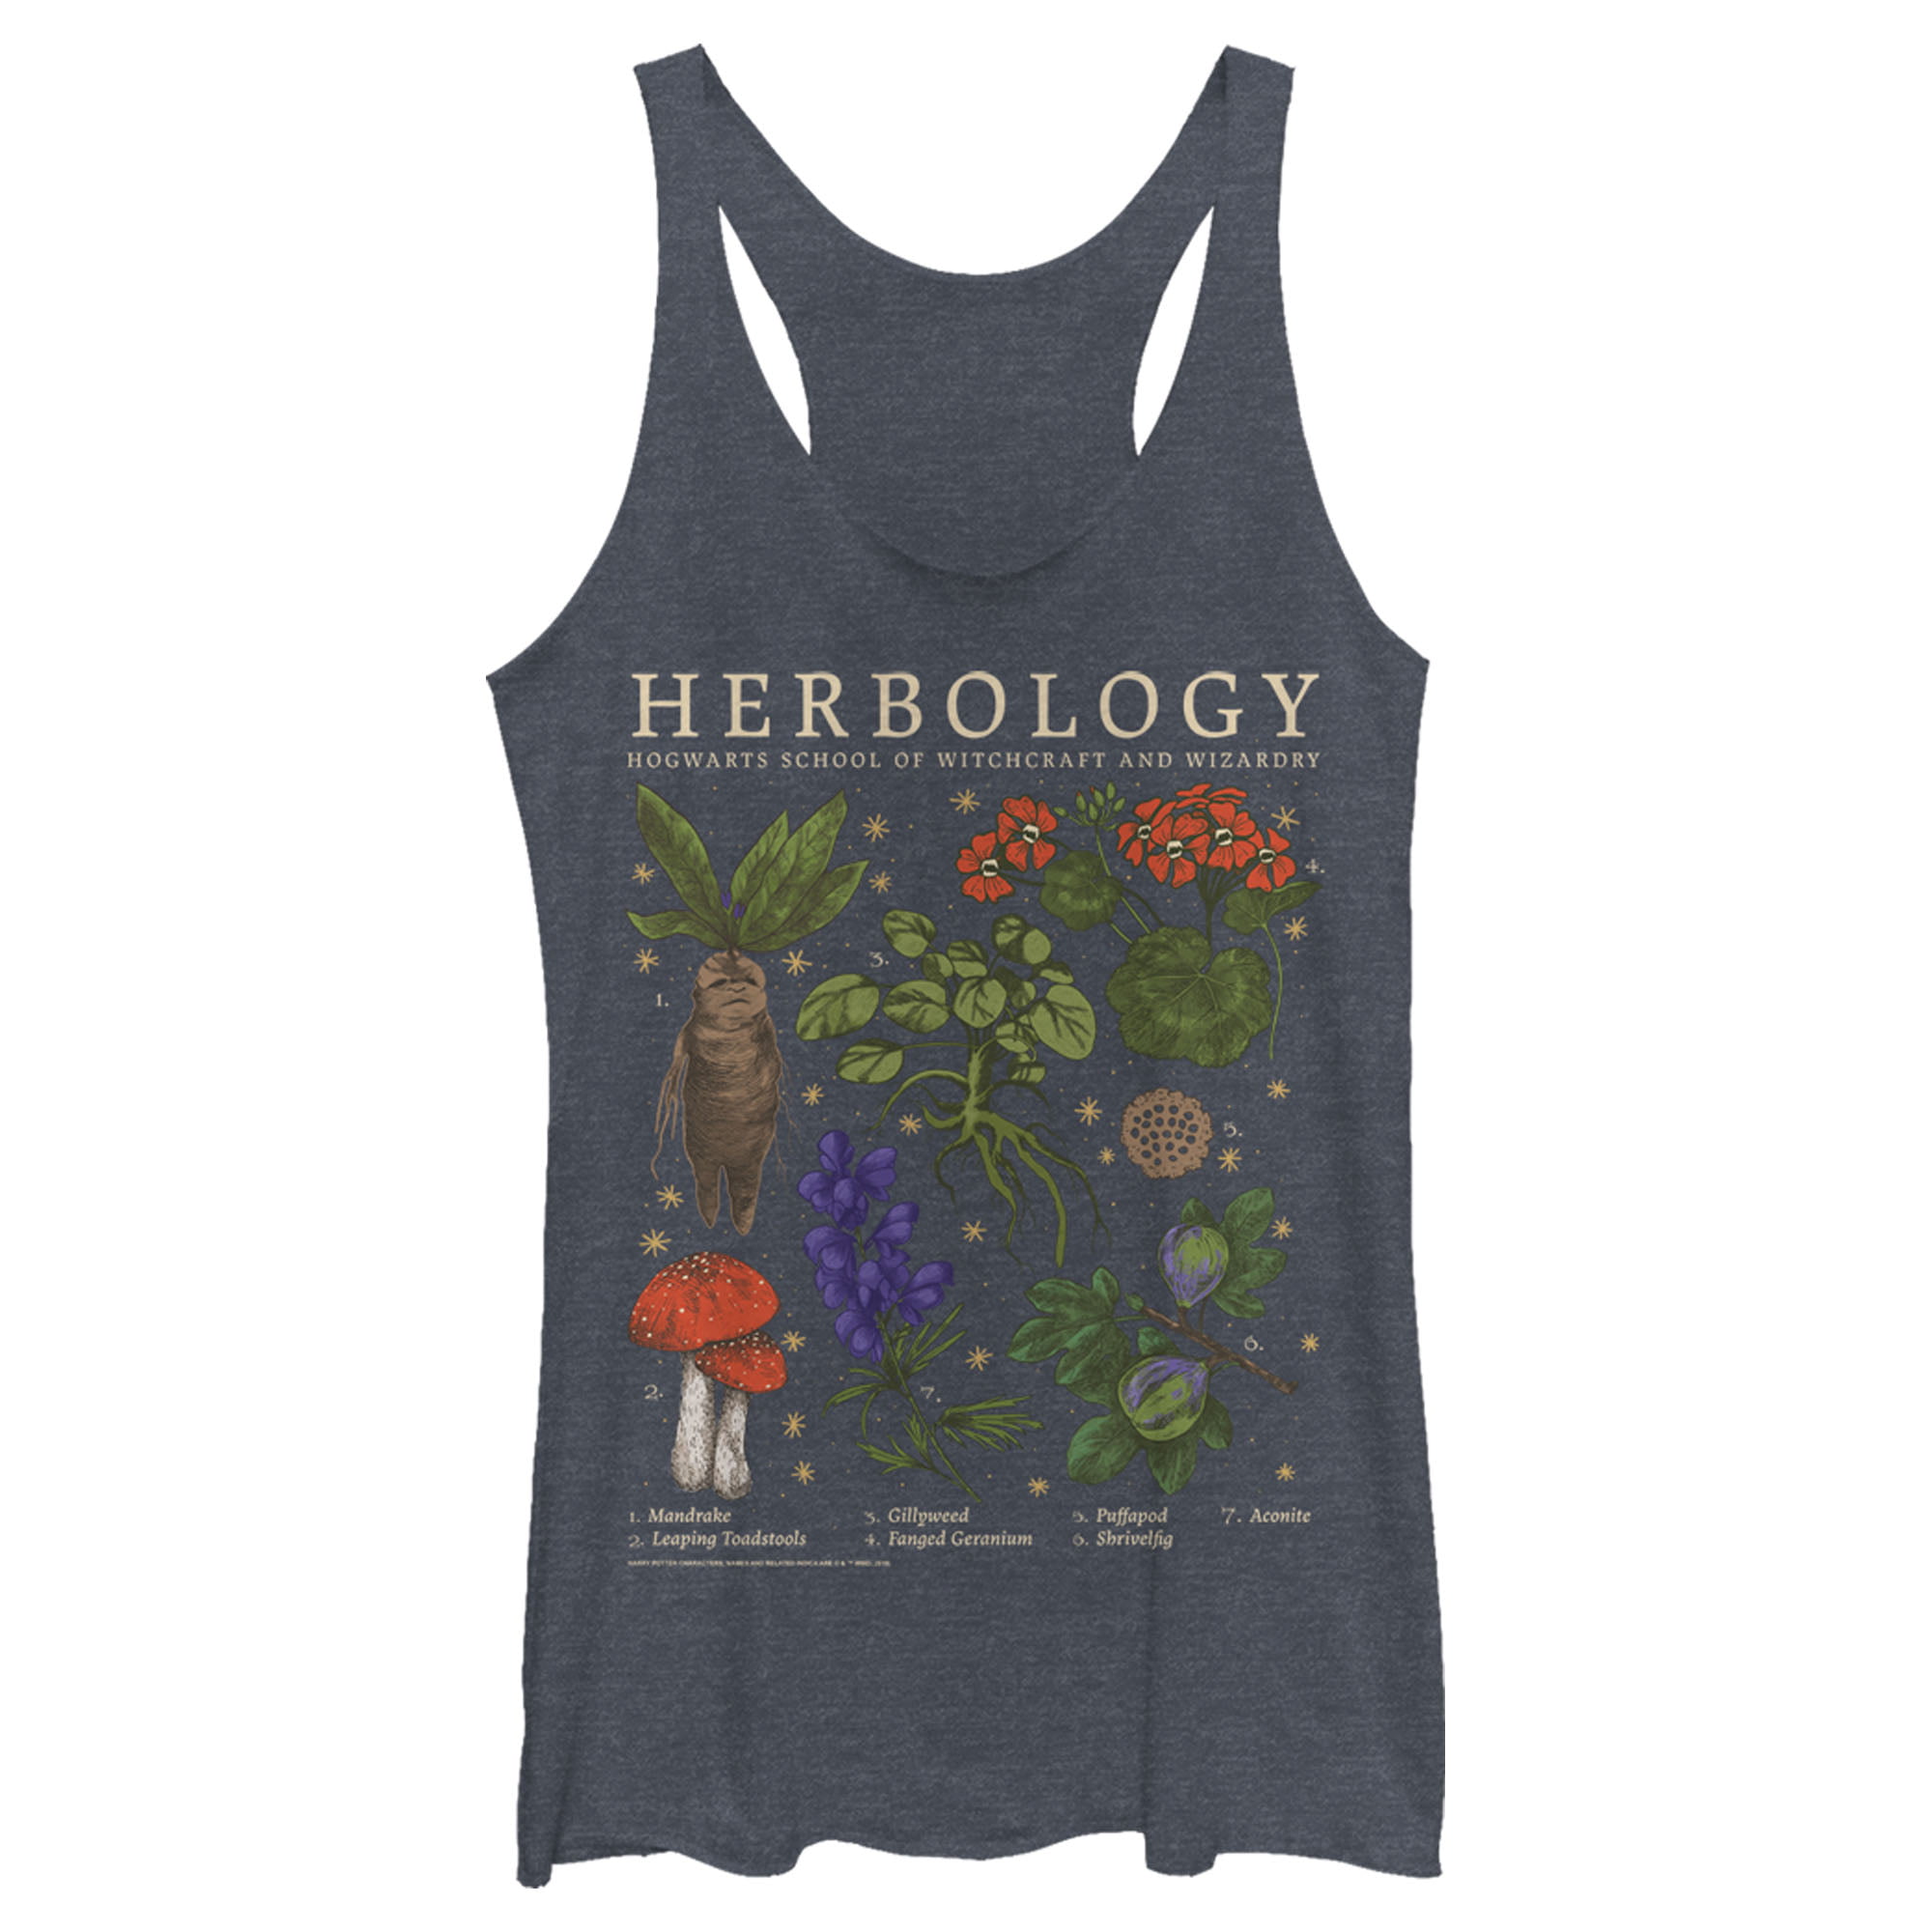 herbology tank top for women.